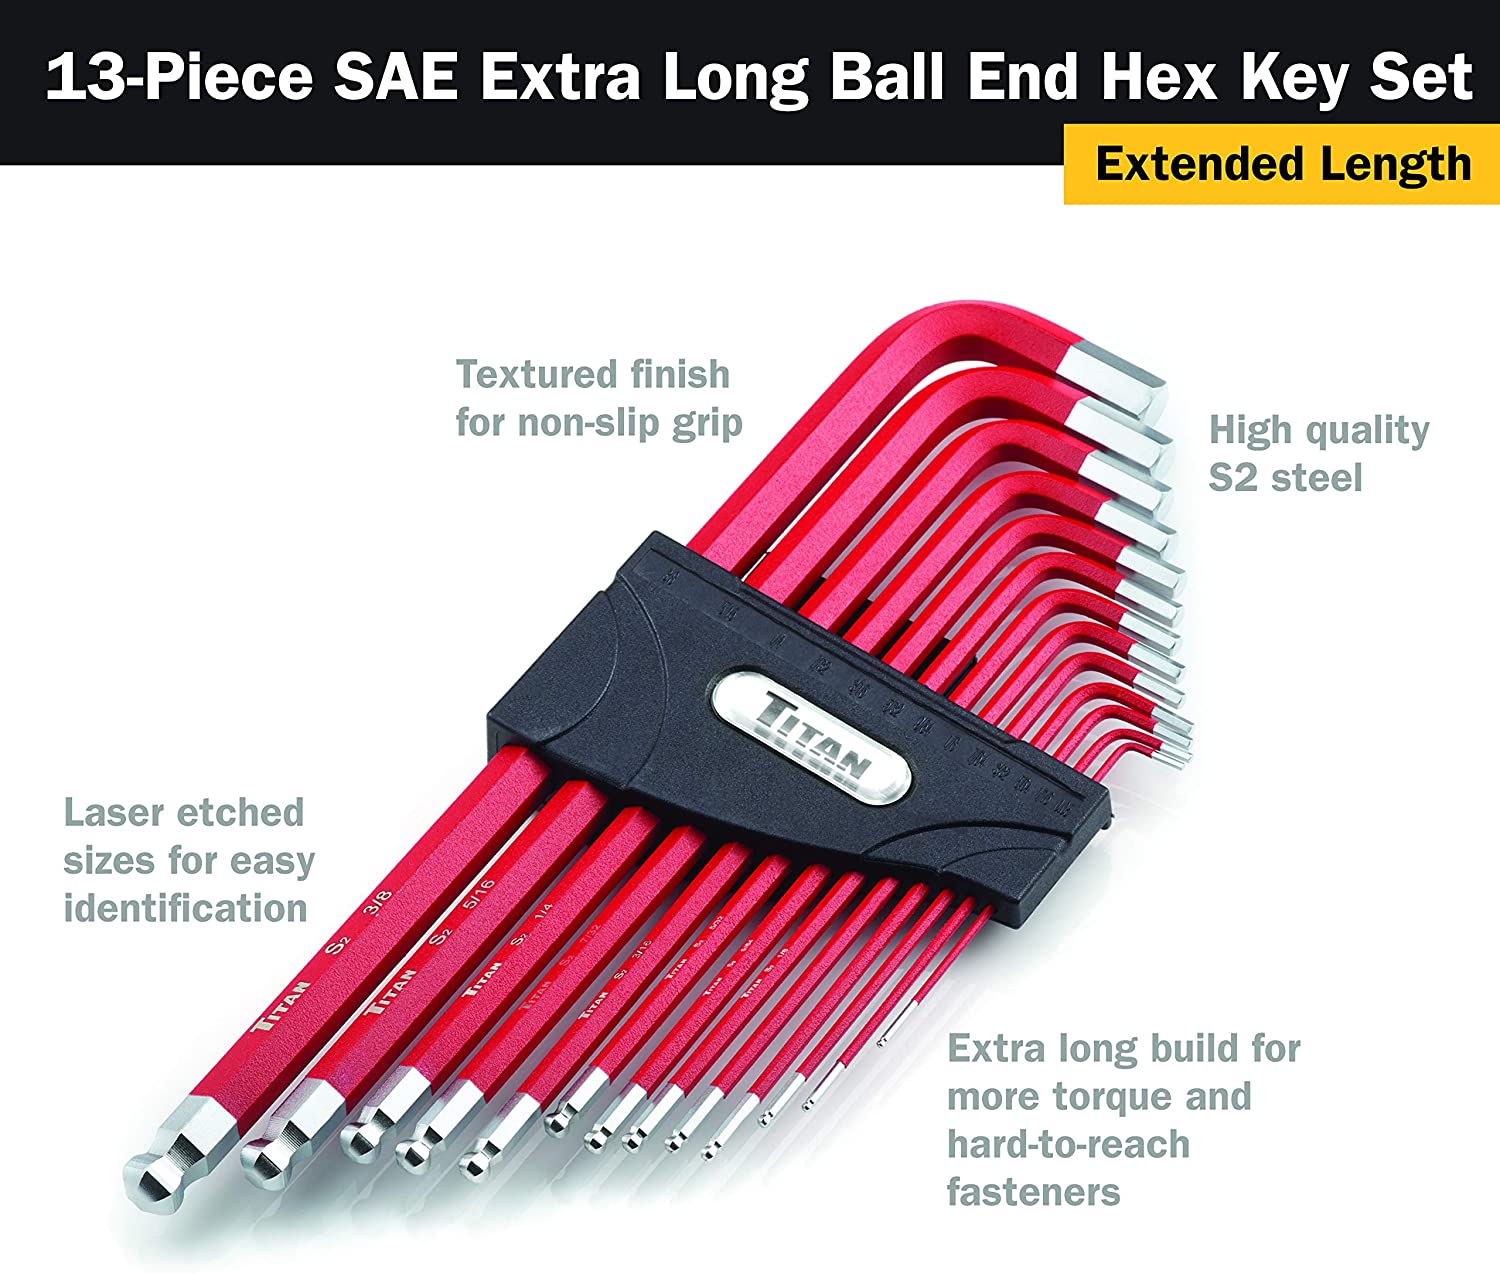 Titan 12713 13-Piece SAE Extra Long Ball End Hex Key Set - MPR Tools & Equipment